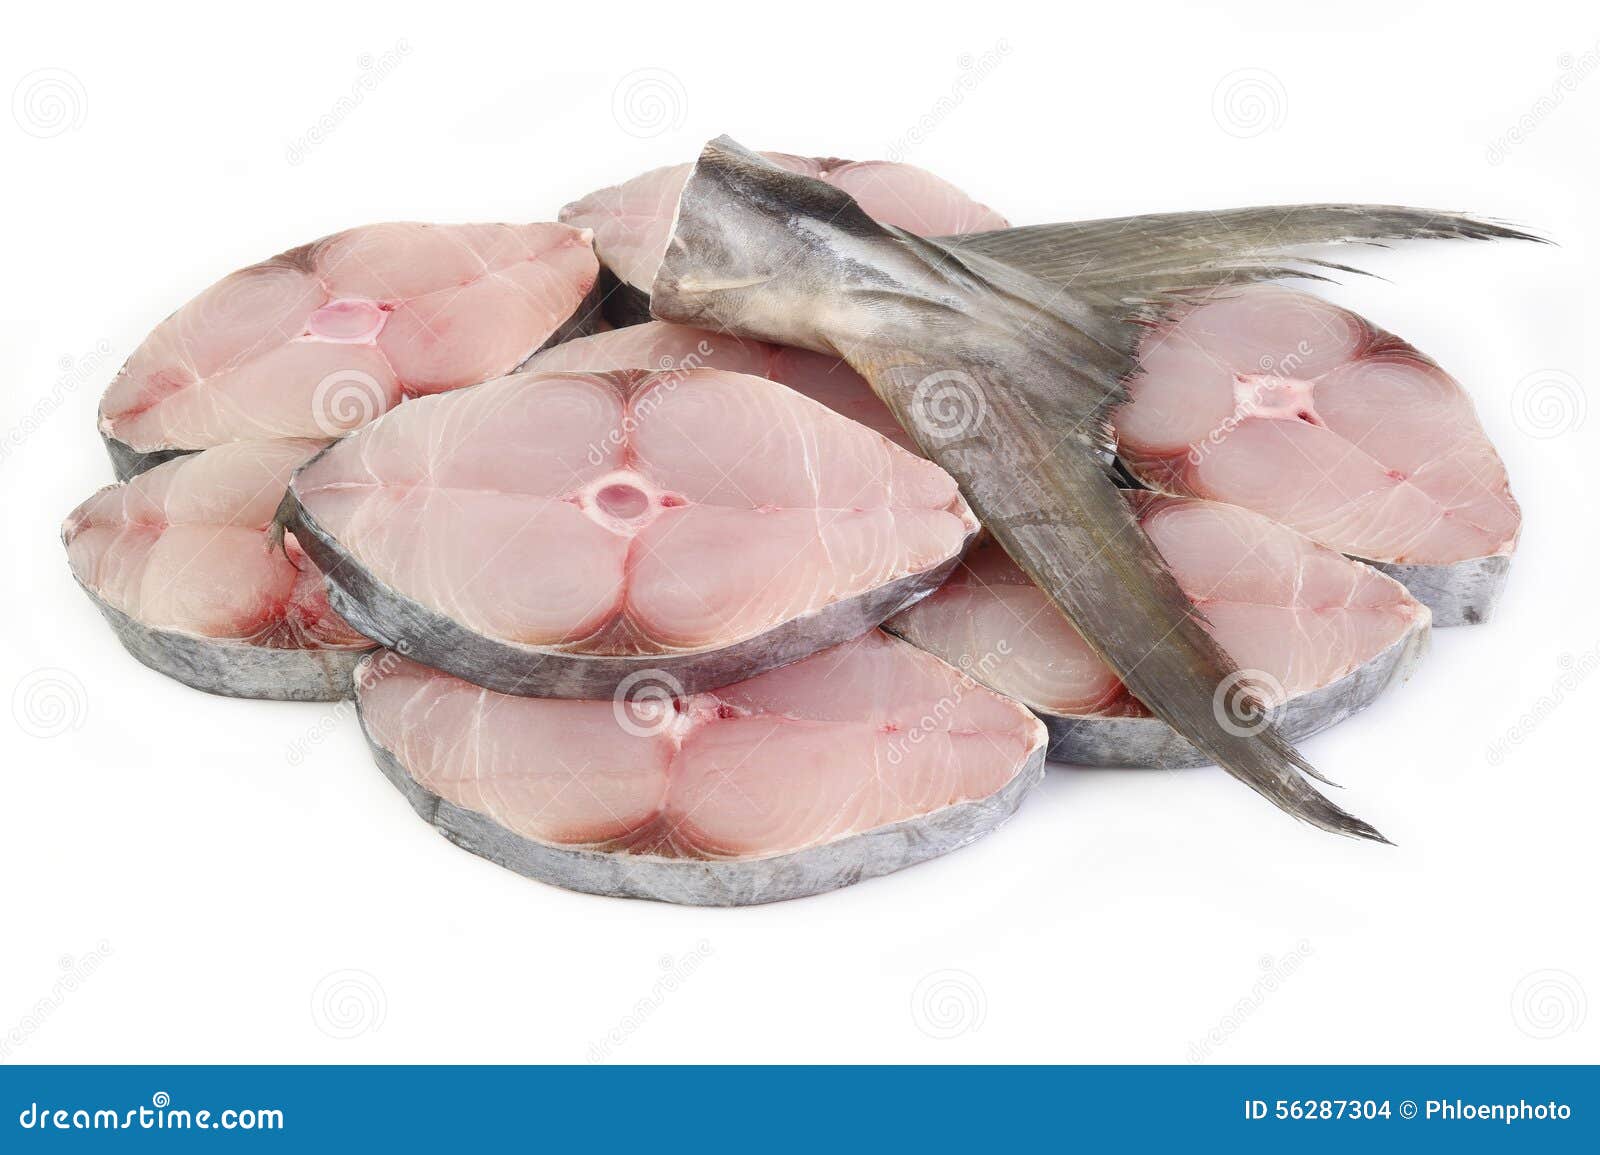 King mackerel fish stock photo. Image of proteins, mackerel - 56287304